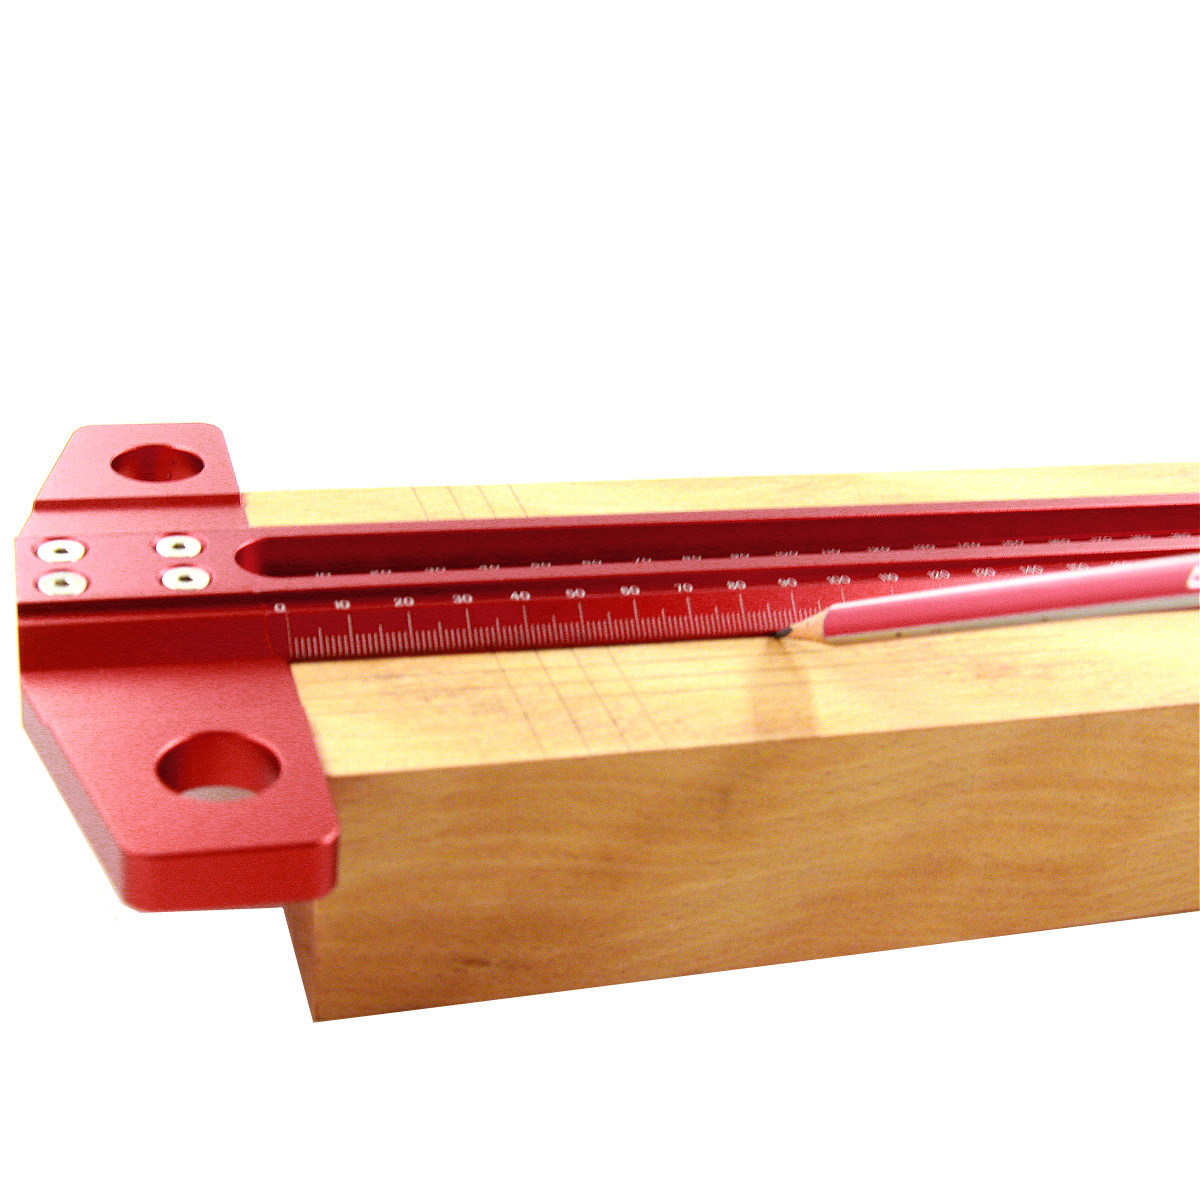 ETOPOO-Woodworking-T-type-Line-Scriber-Hole-Scale-Ruler-Aluminum-Alloy-Marking-Gauge-Crossed-Line-Sc-1798711-3